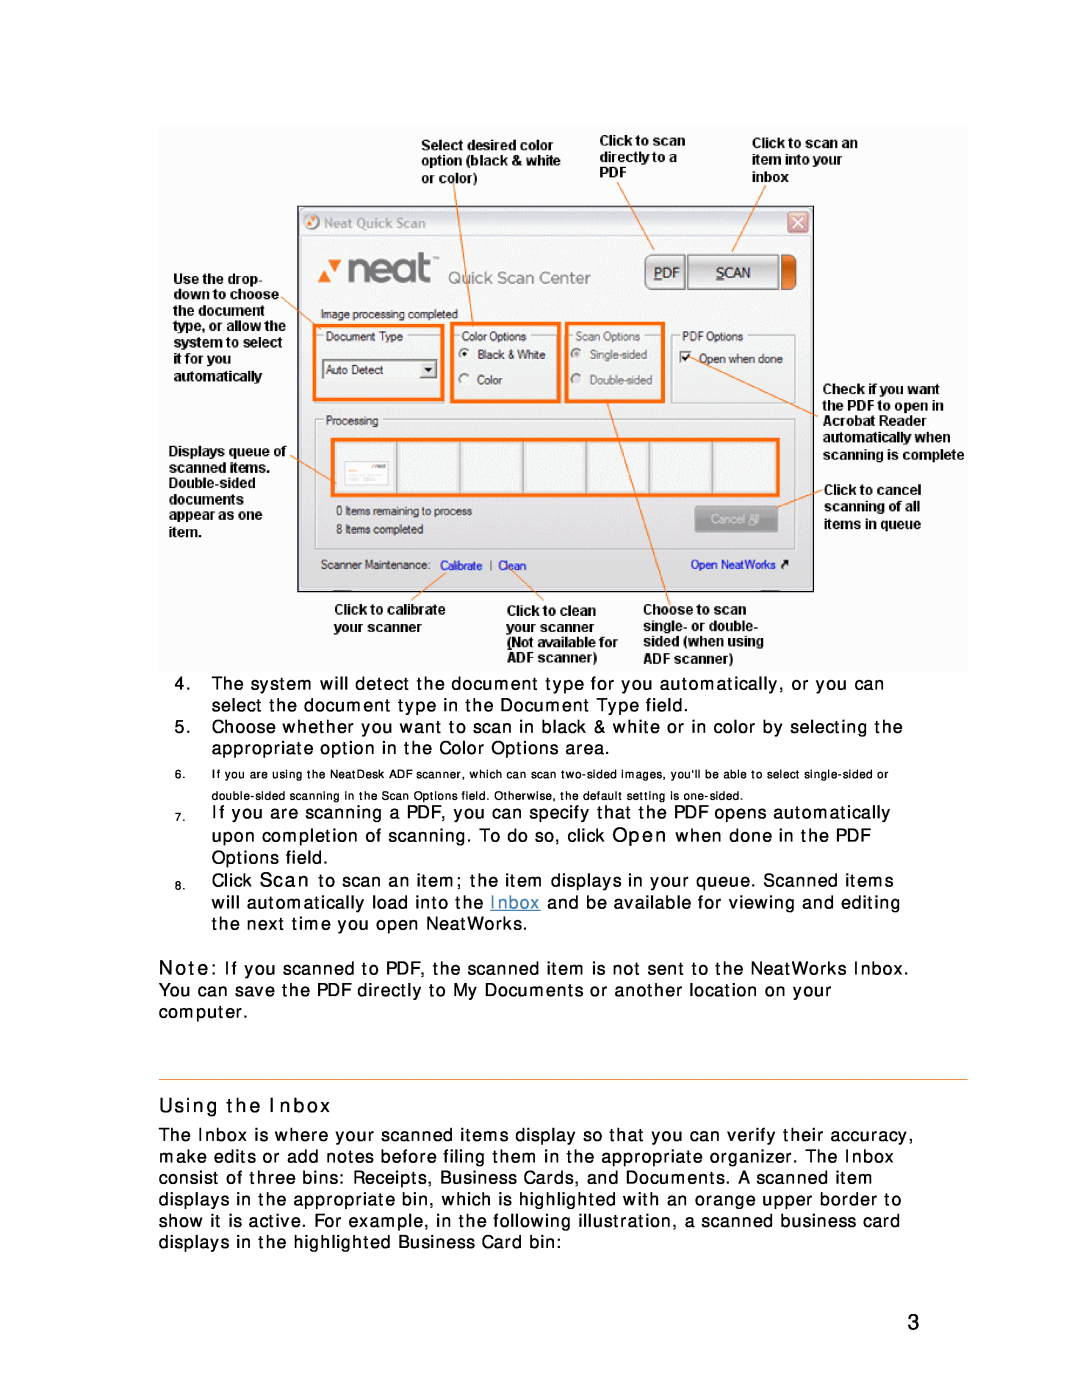 Univex NeatScan, NeatReceipts, NeatDesk manual Using the Inbox 